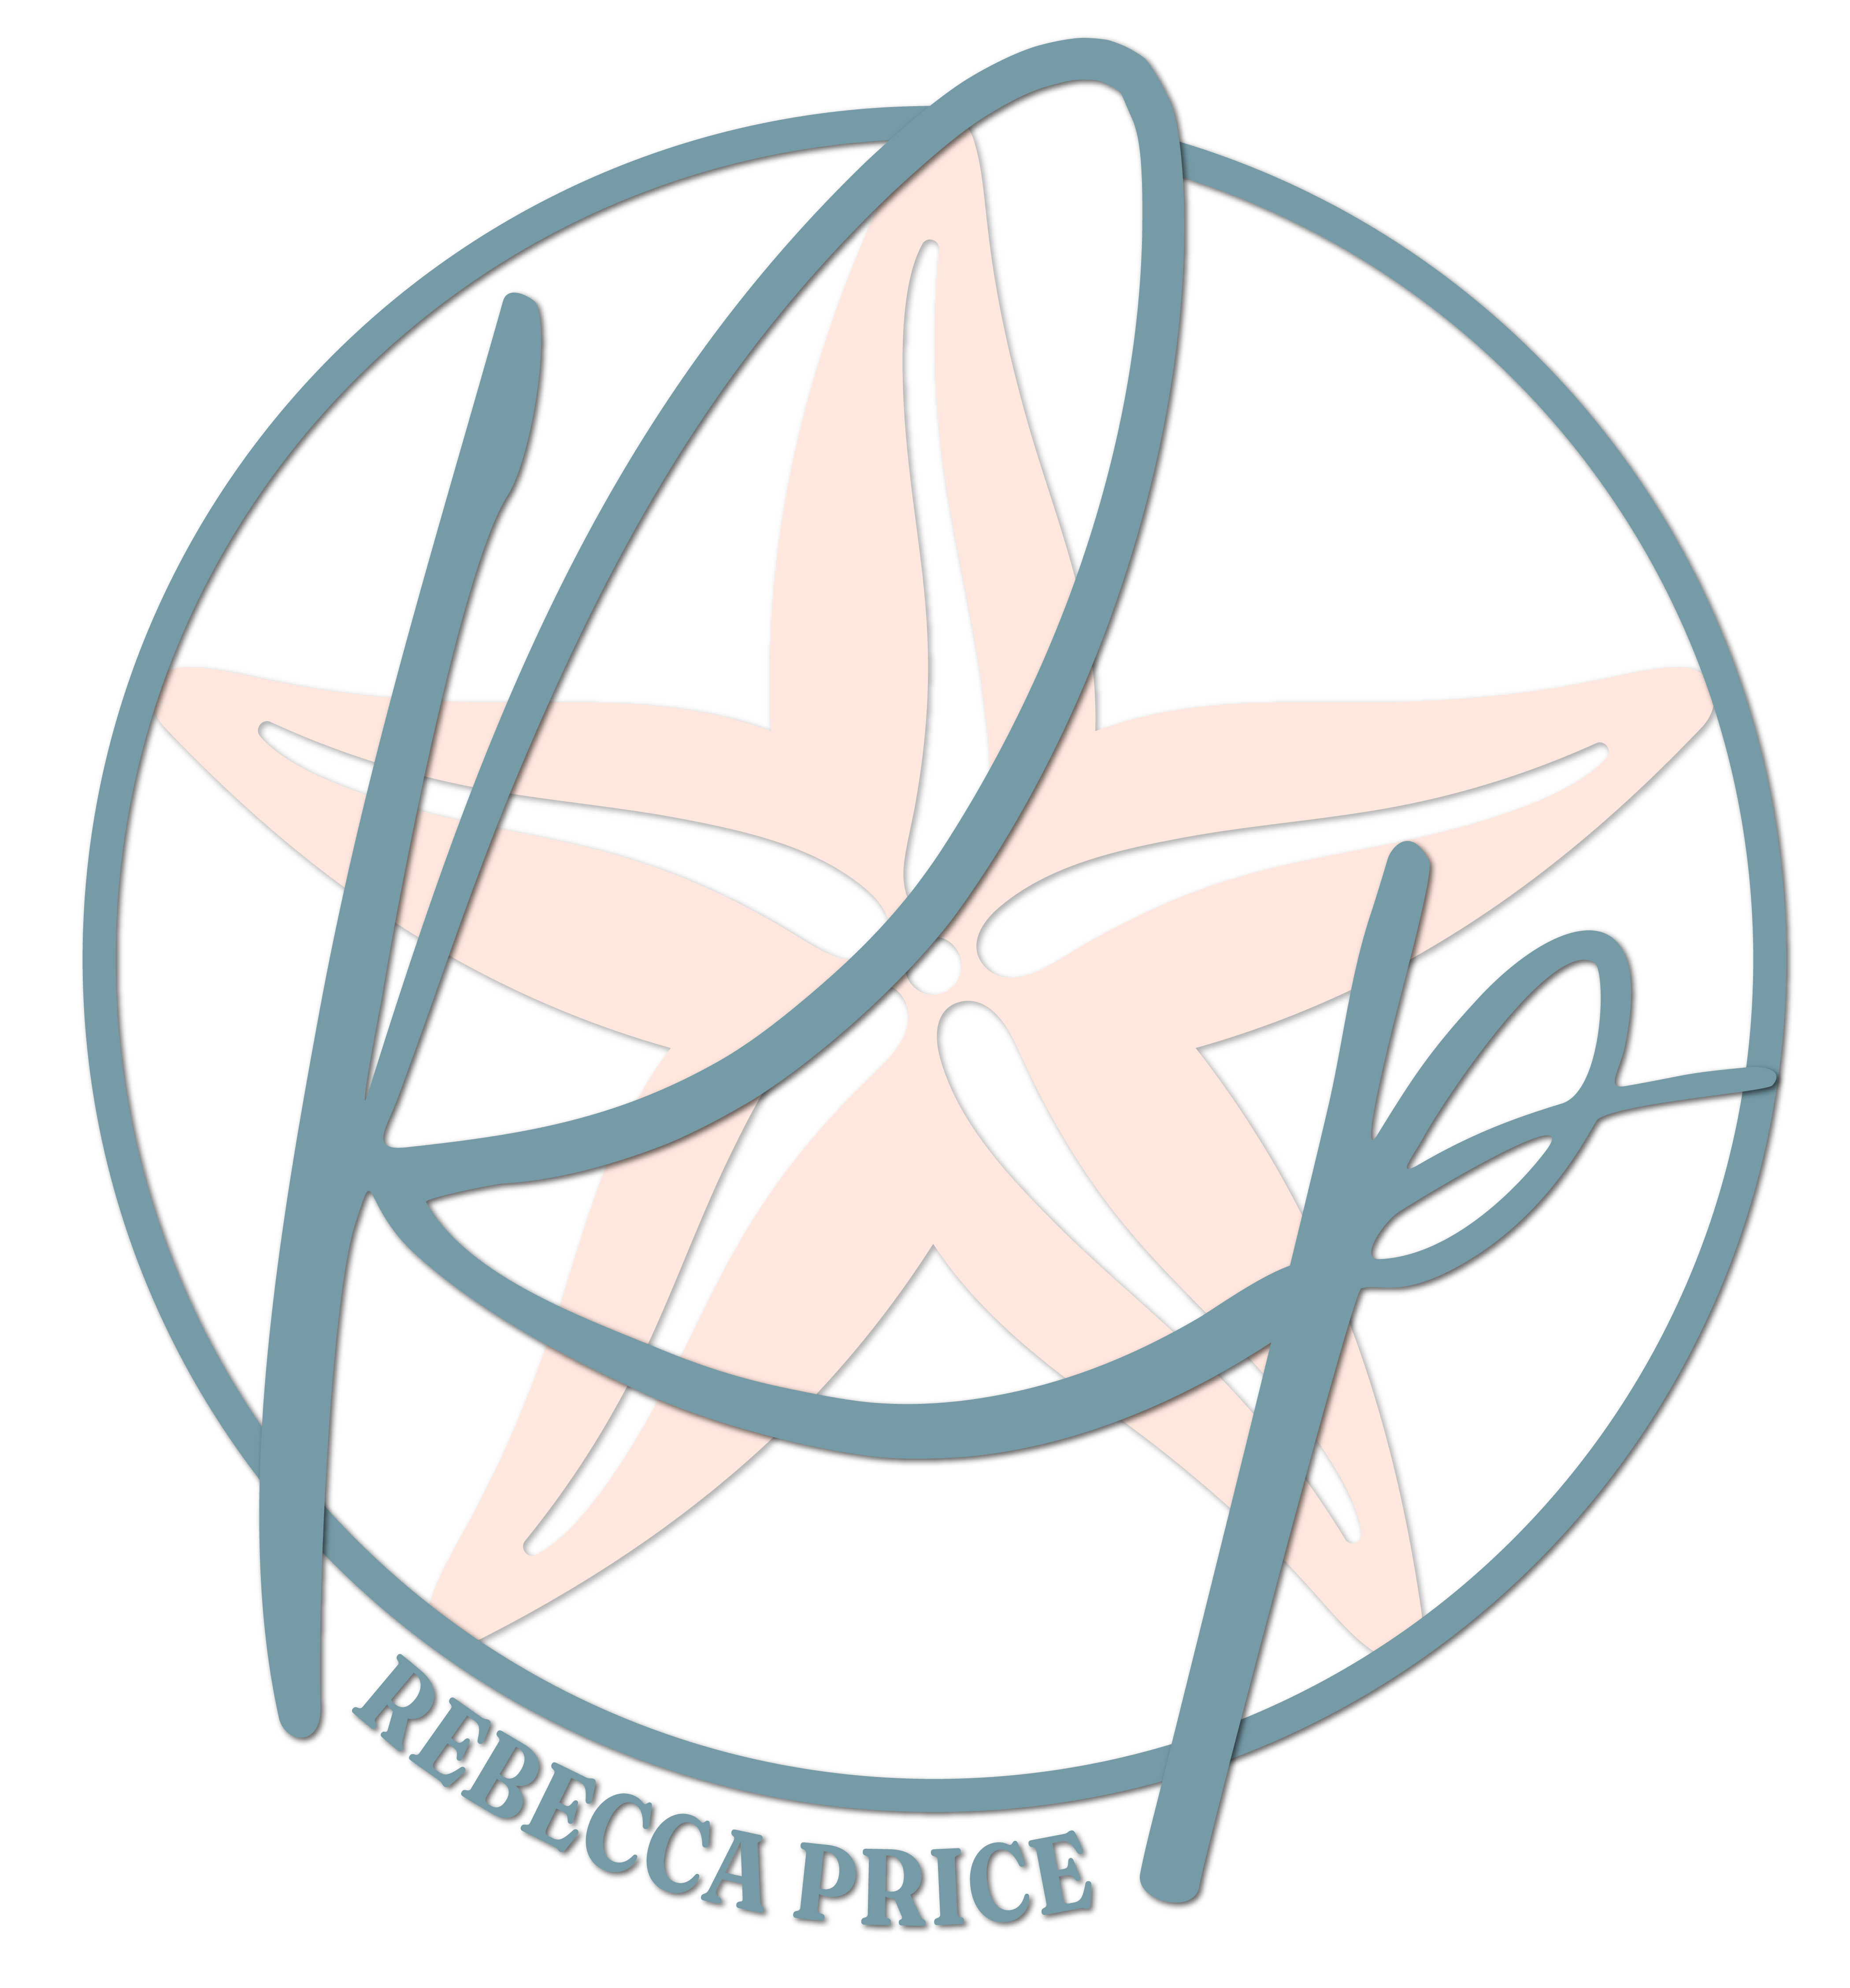 Rebecca Price logo